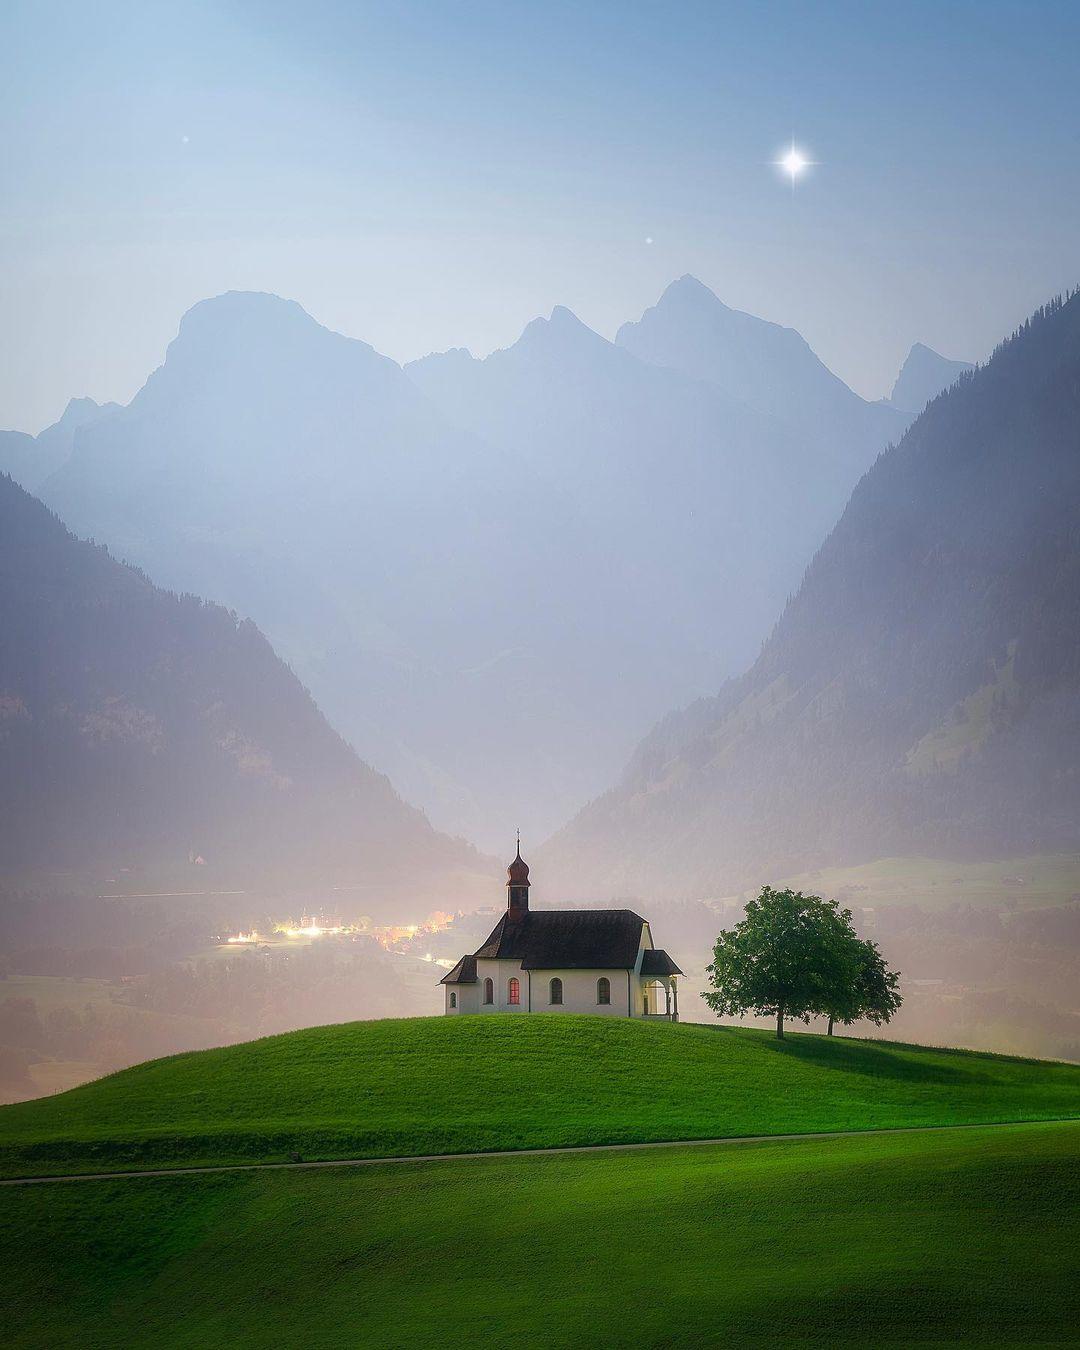  月光下的山间，Louis Chan摄于瑞士。 